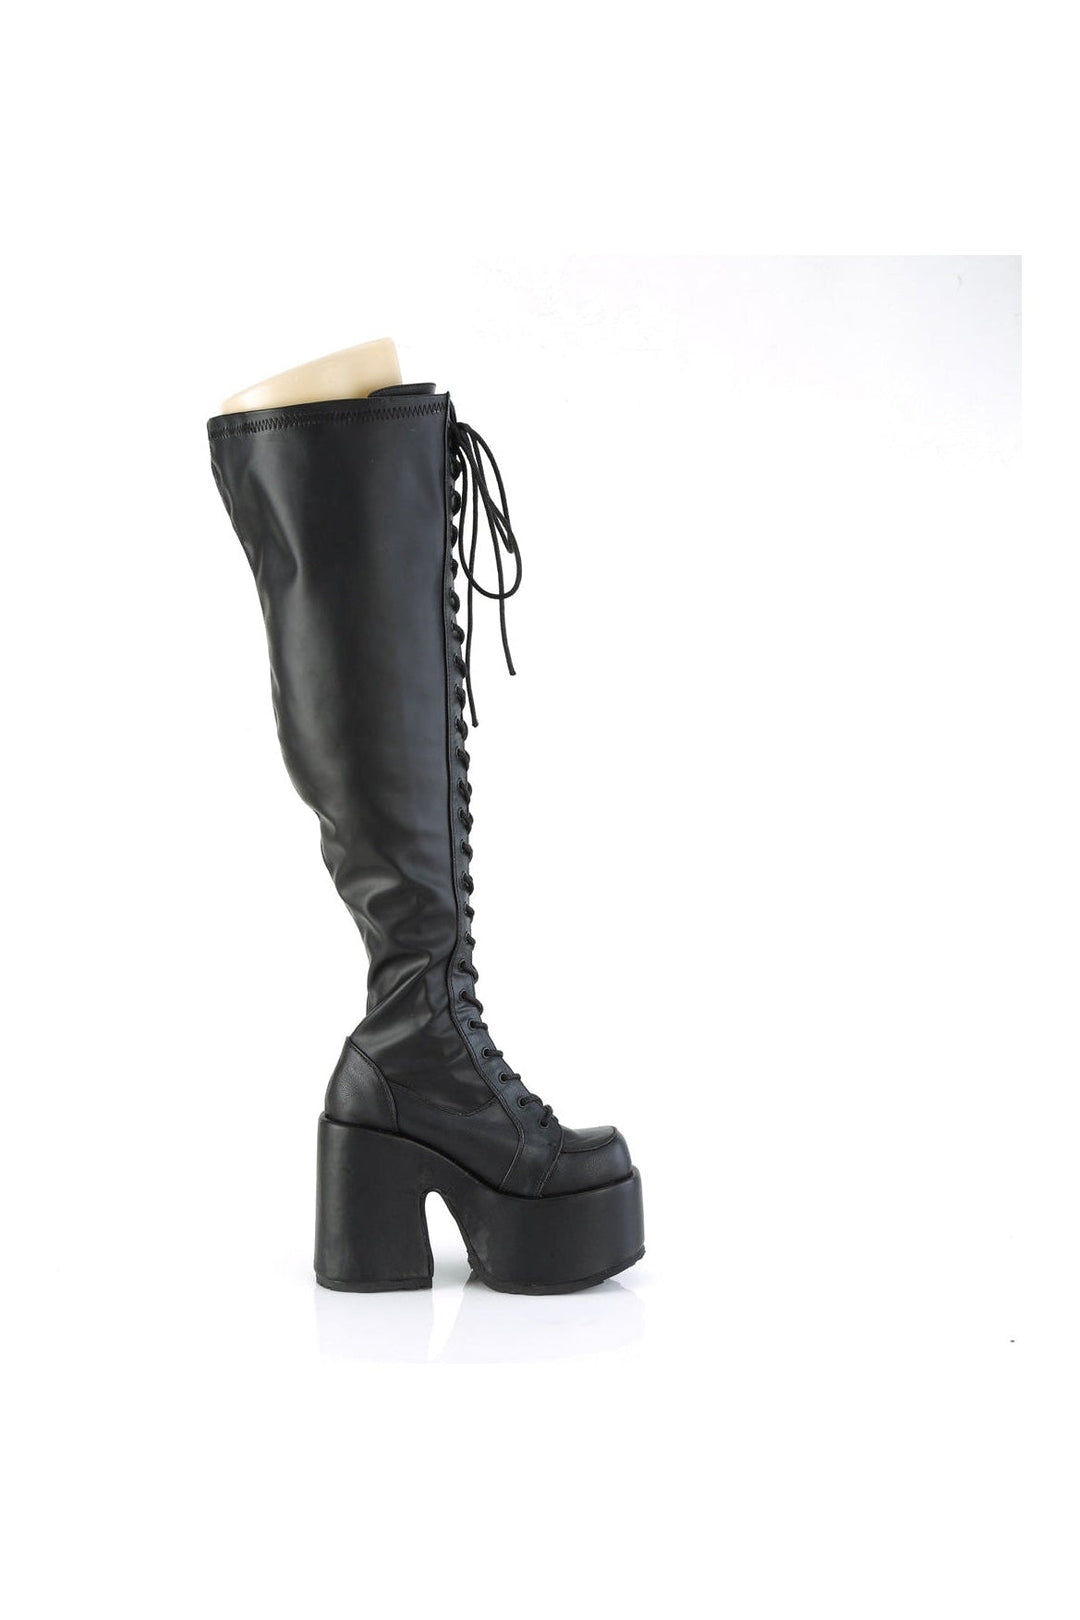 CAMEL-300WC Black Vegan Leather Thigh Boot